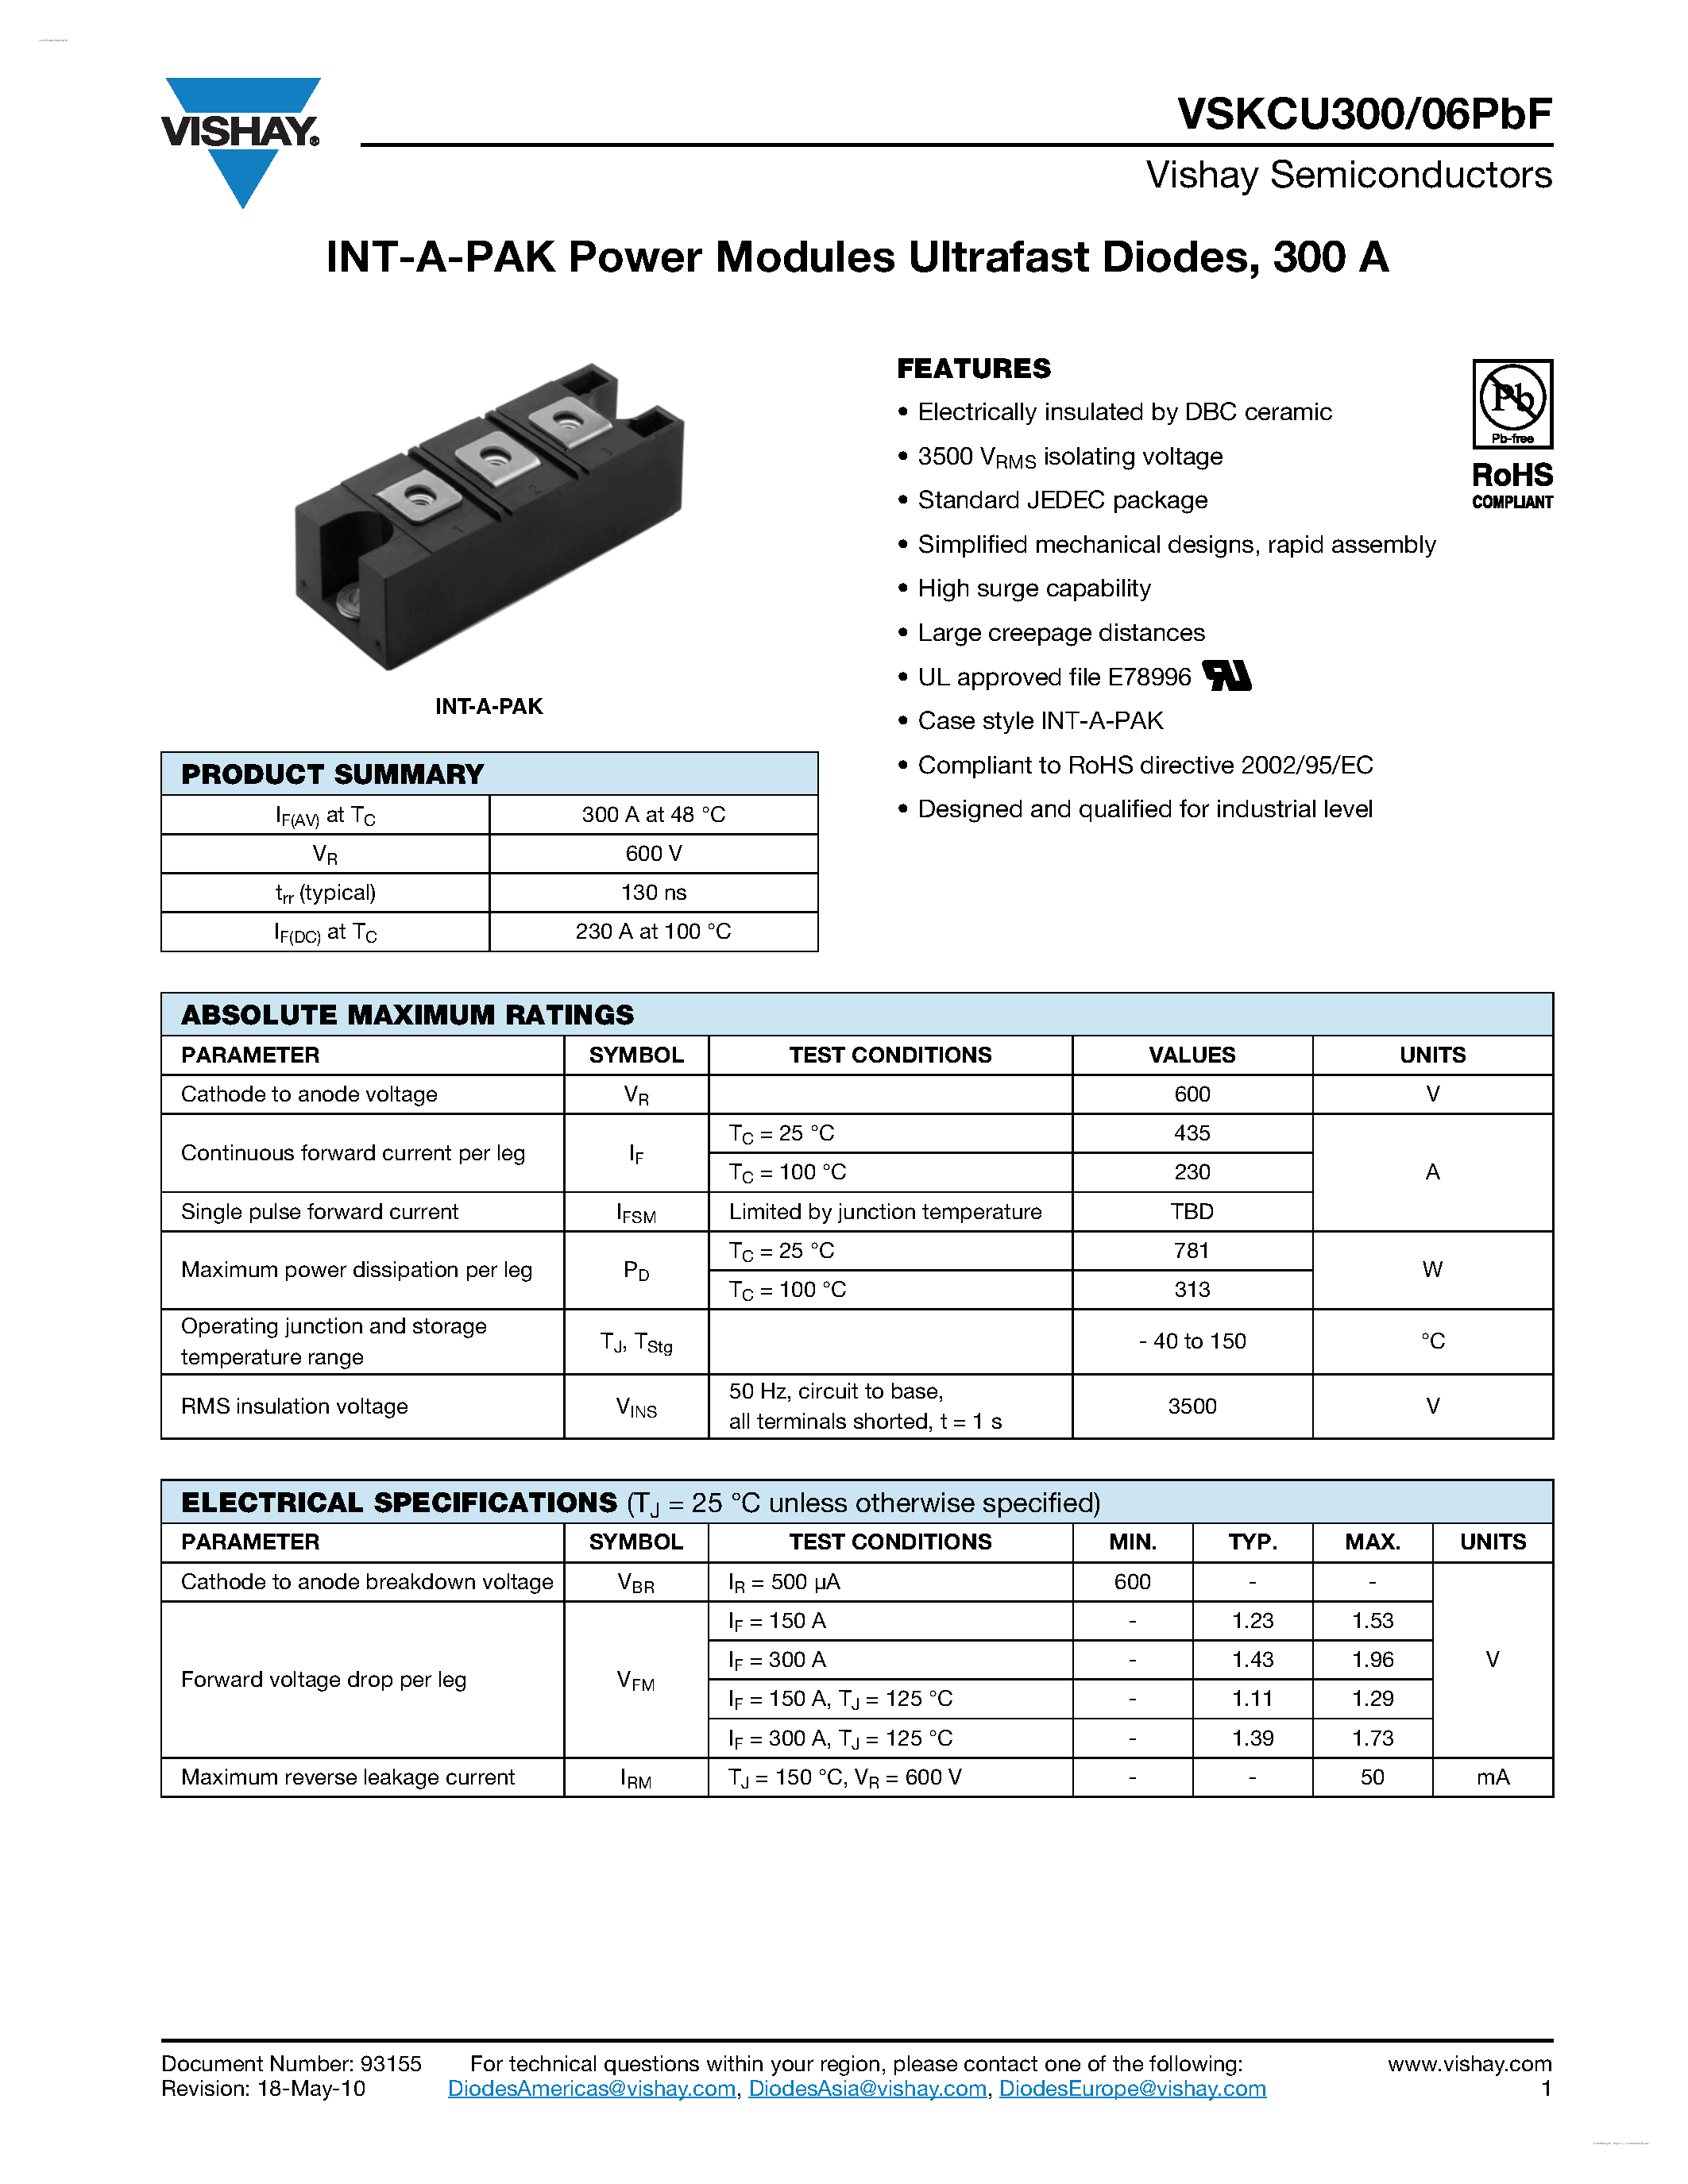 Даташит VSKCU300/06PBF - INT-A-PAK Power Modules Ultrafast Diodes страница 1